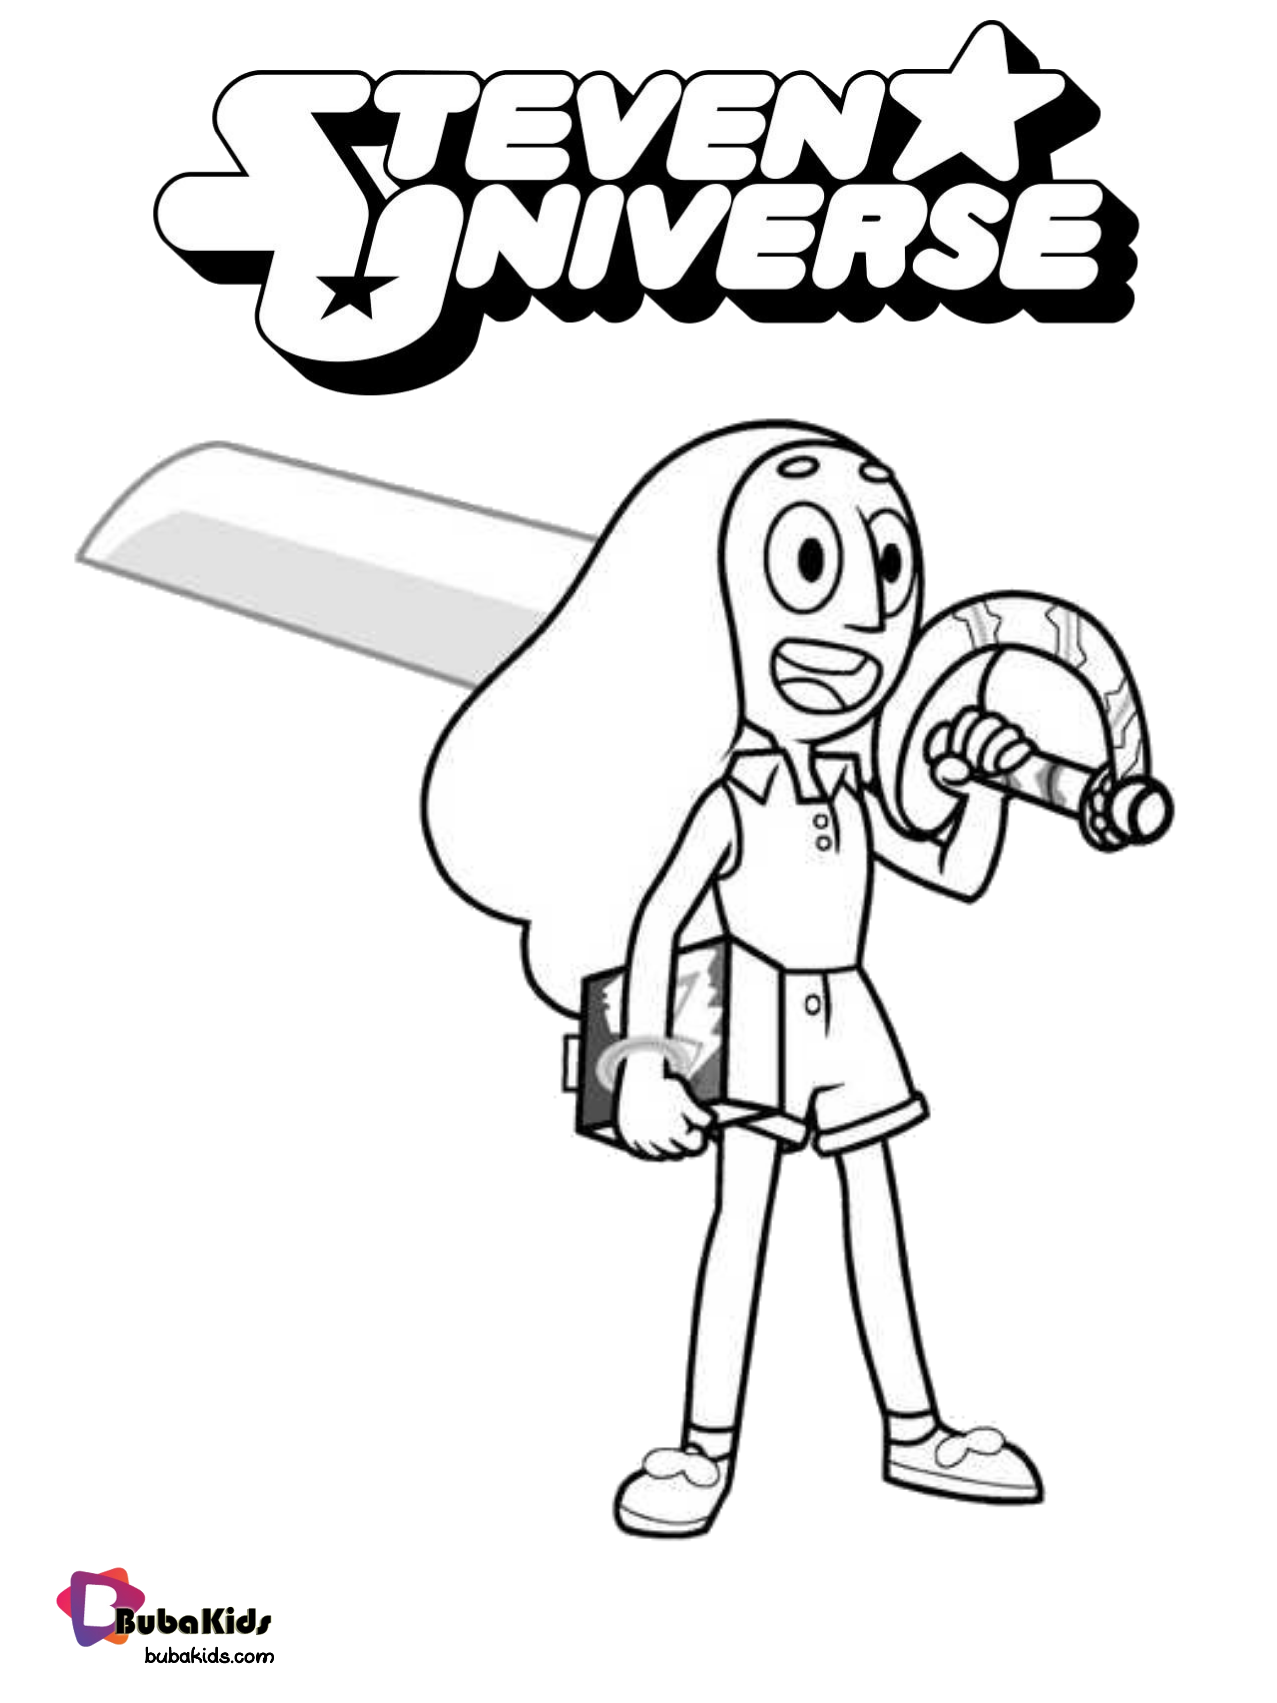 Connie Maheswara Steven Universe coloring page. Wallpaper